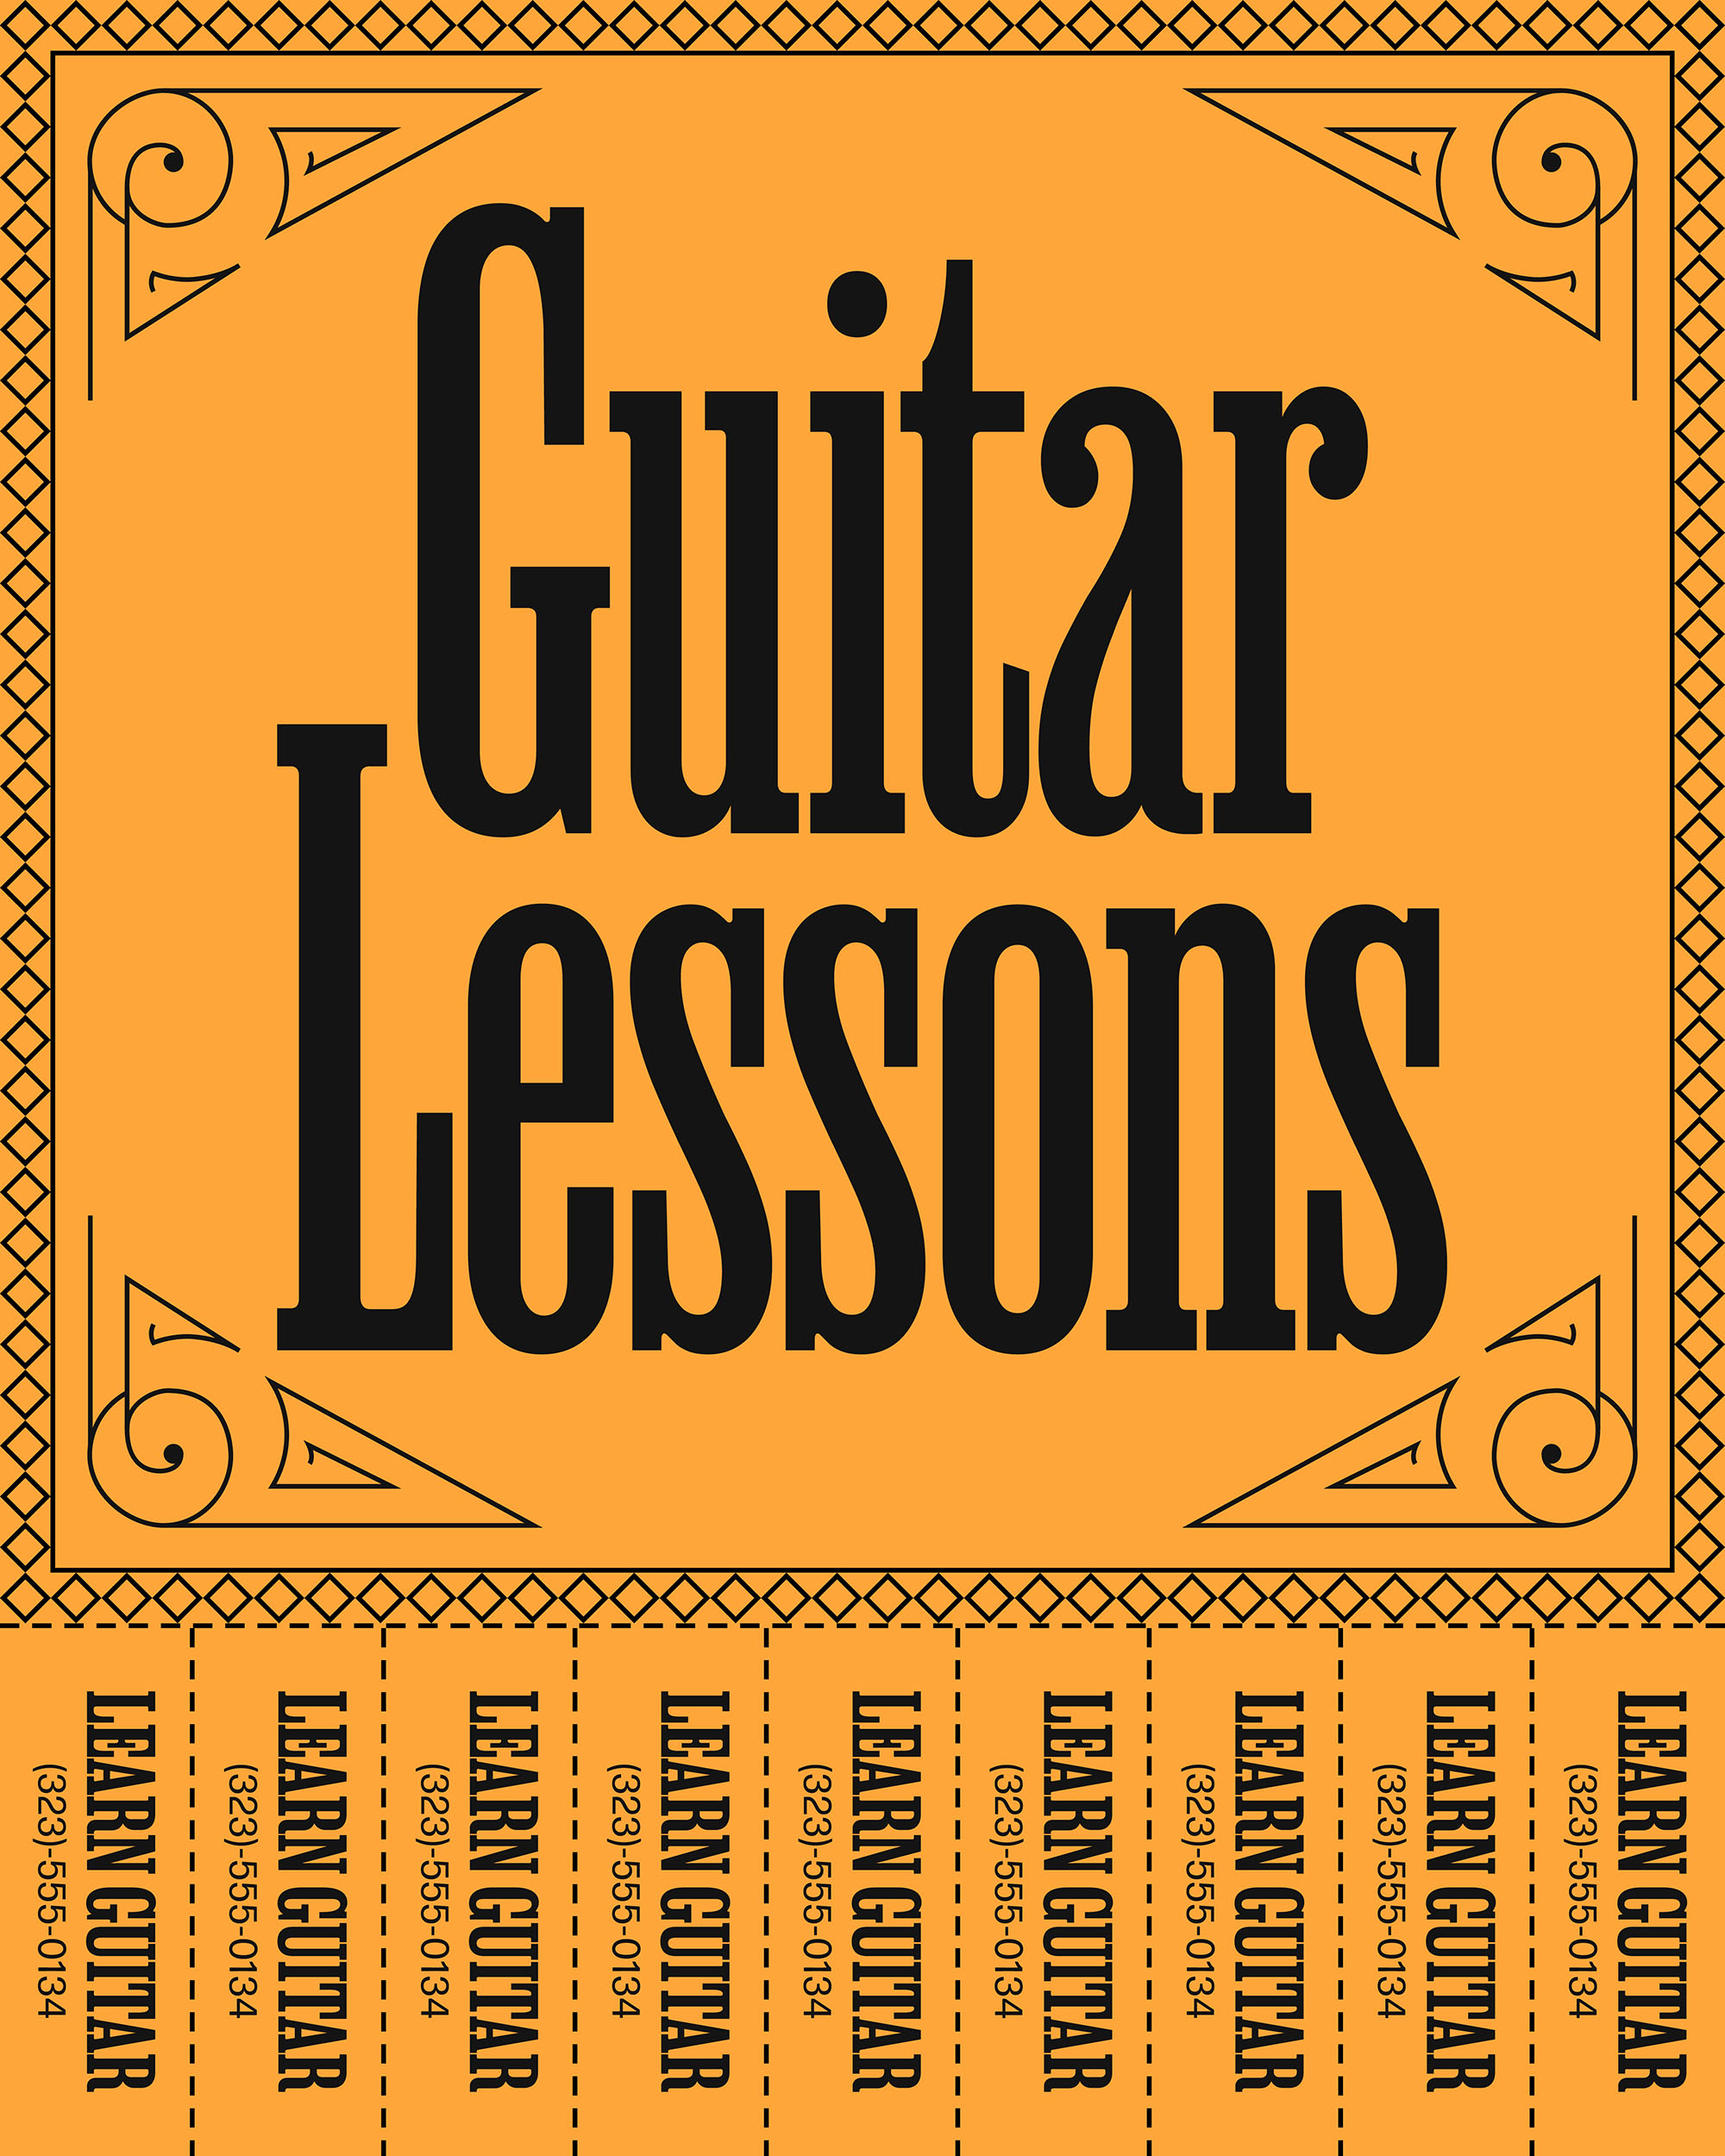 Guitar Lessons